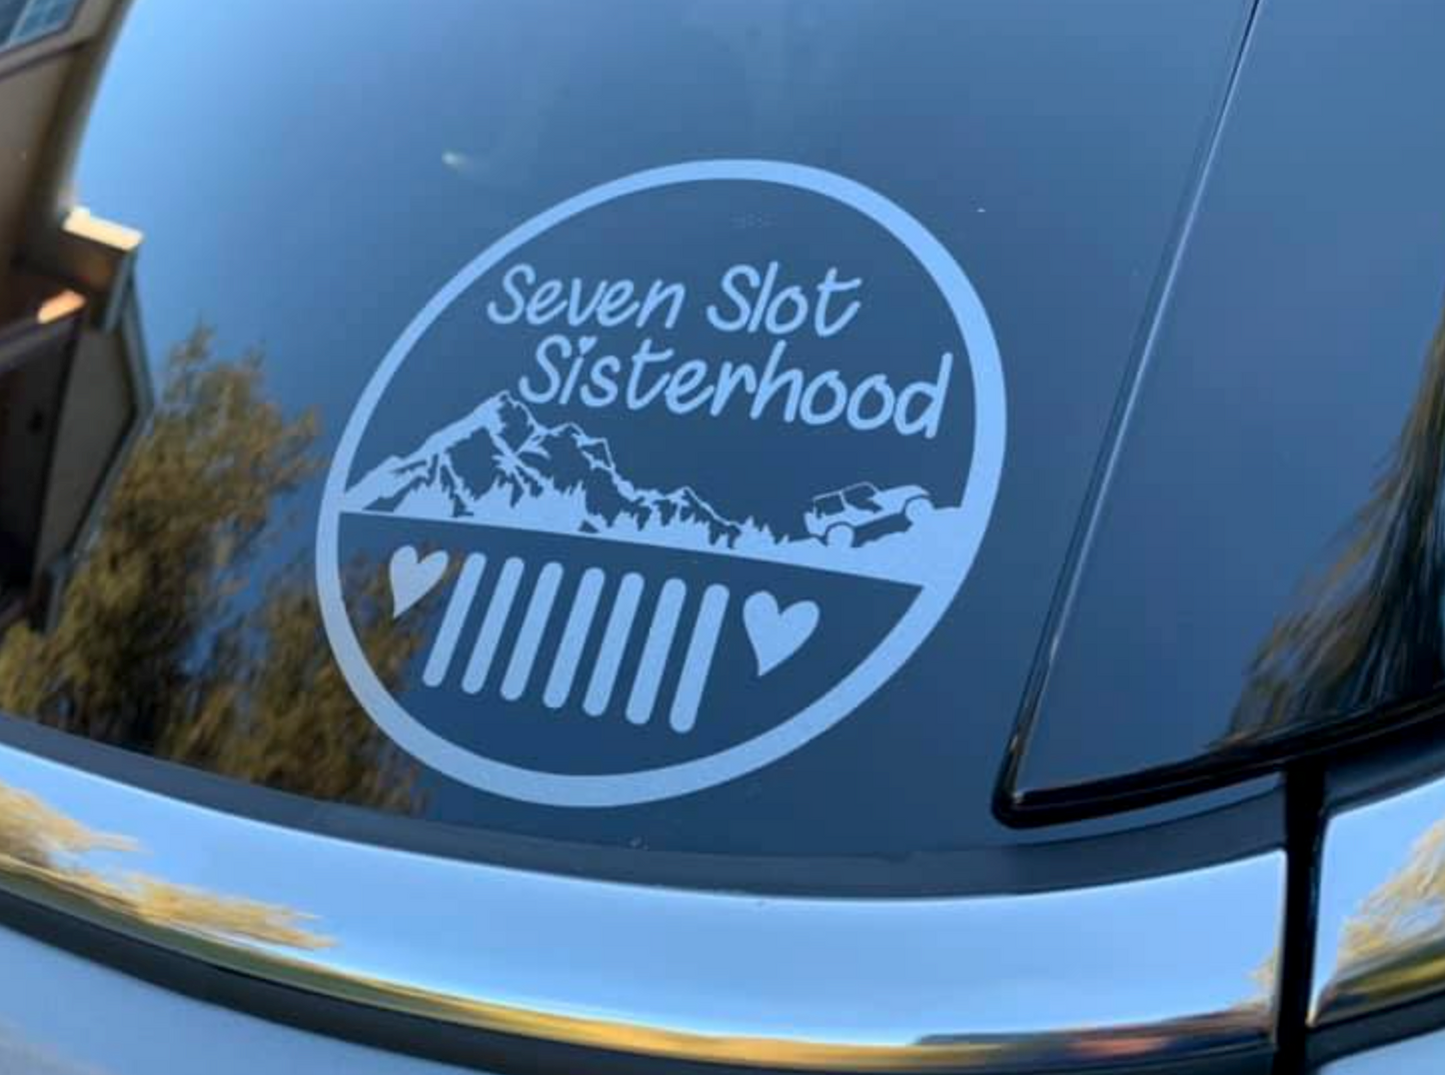 Seven Slot Sisterhood Mountain Round Logo